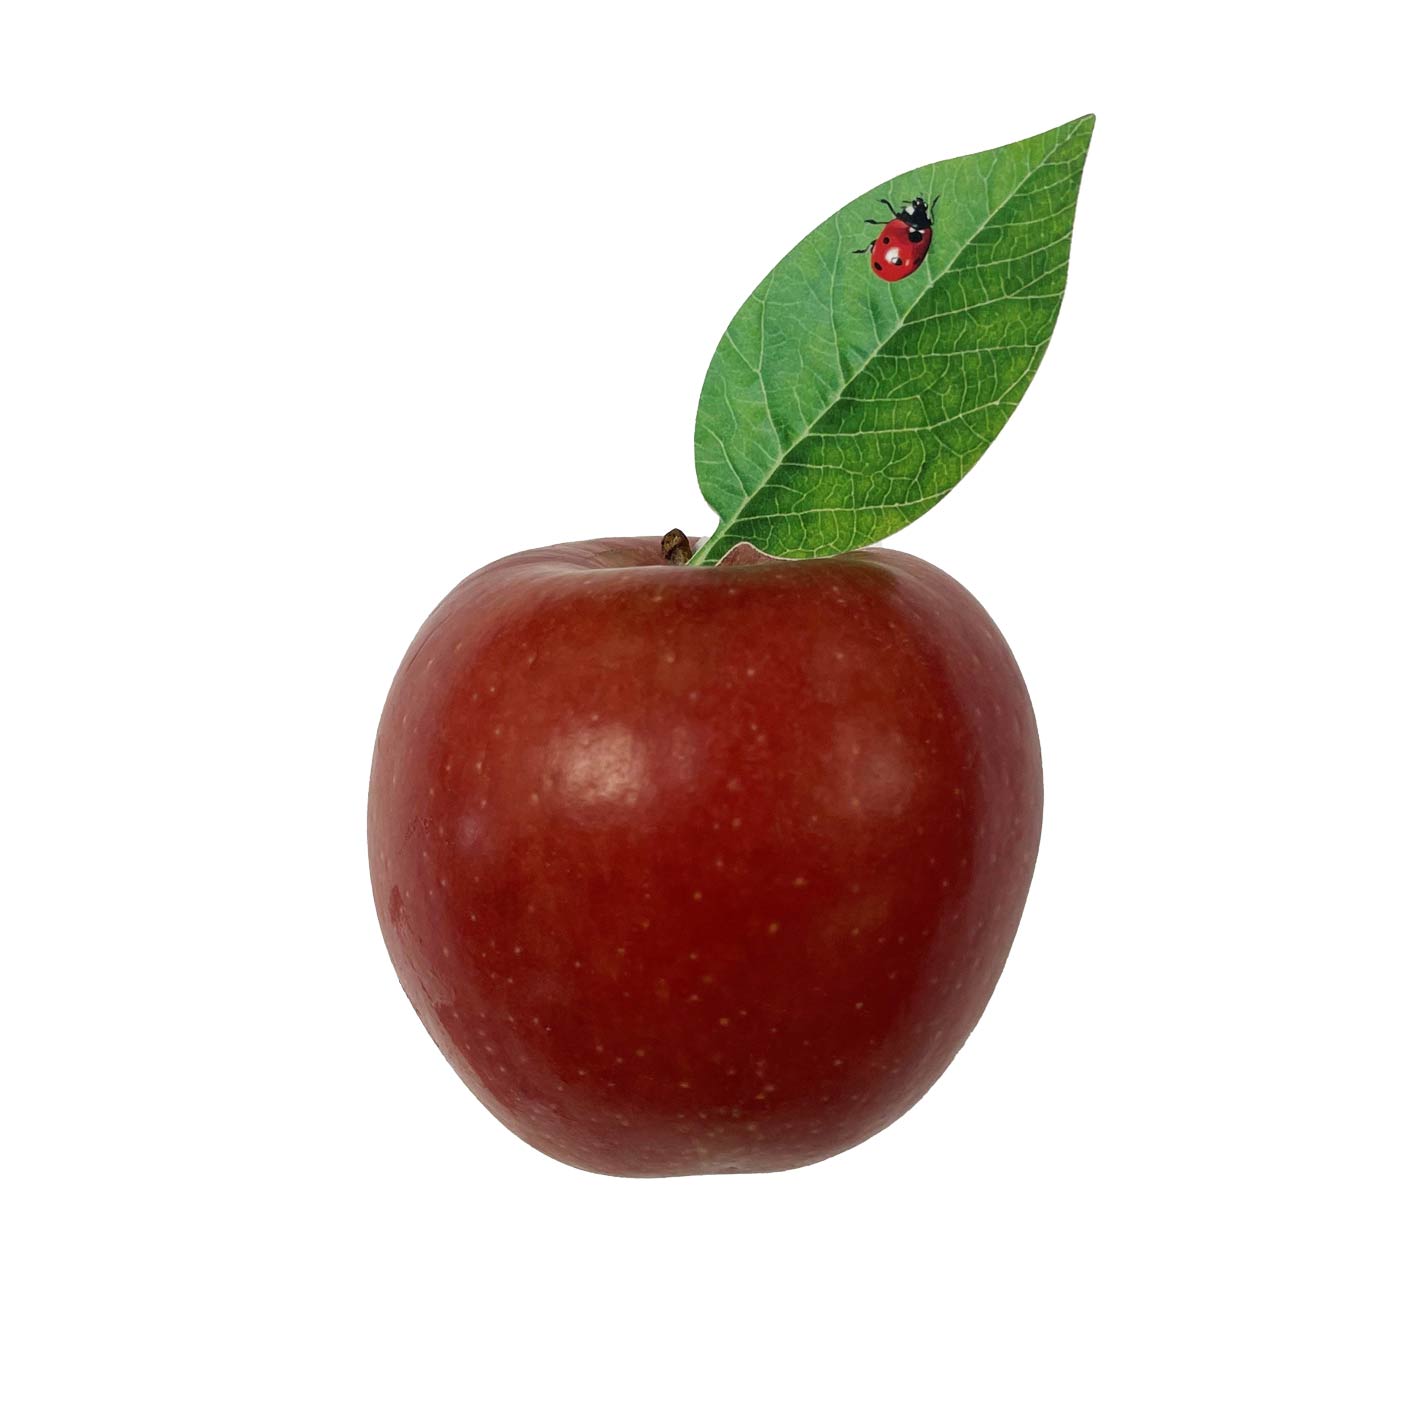 Apfel mit Apfelblatt